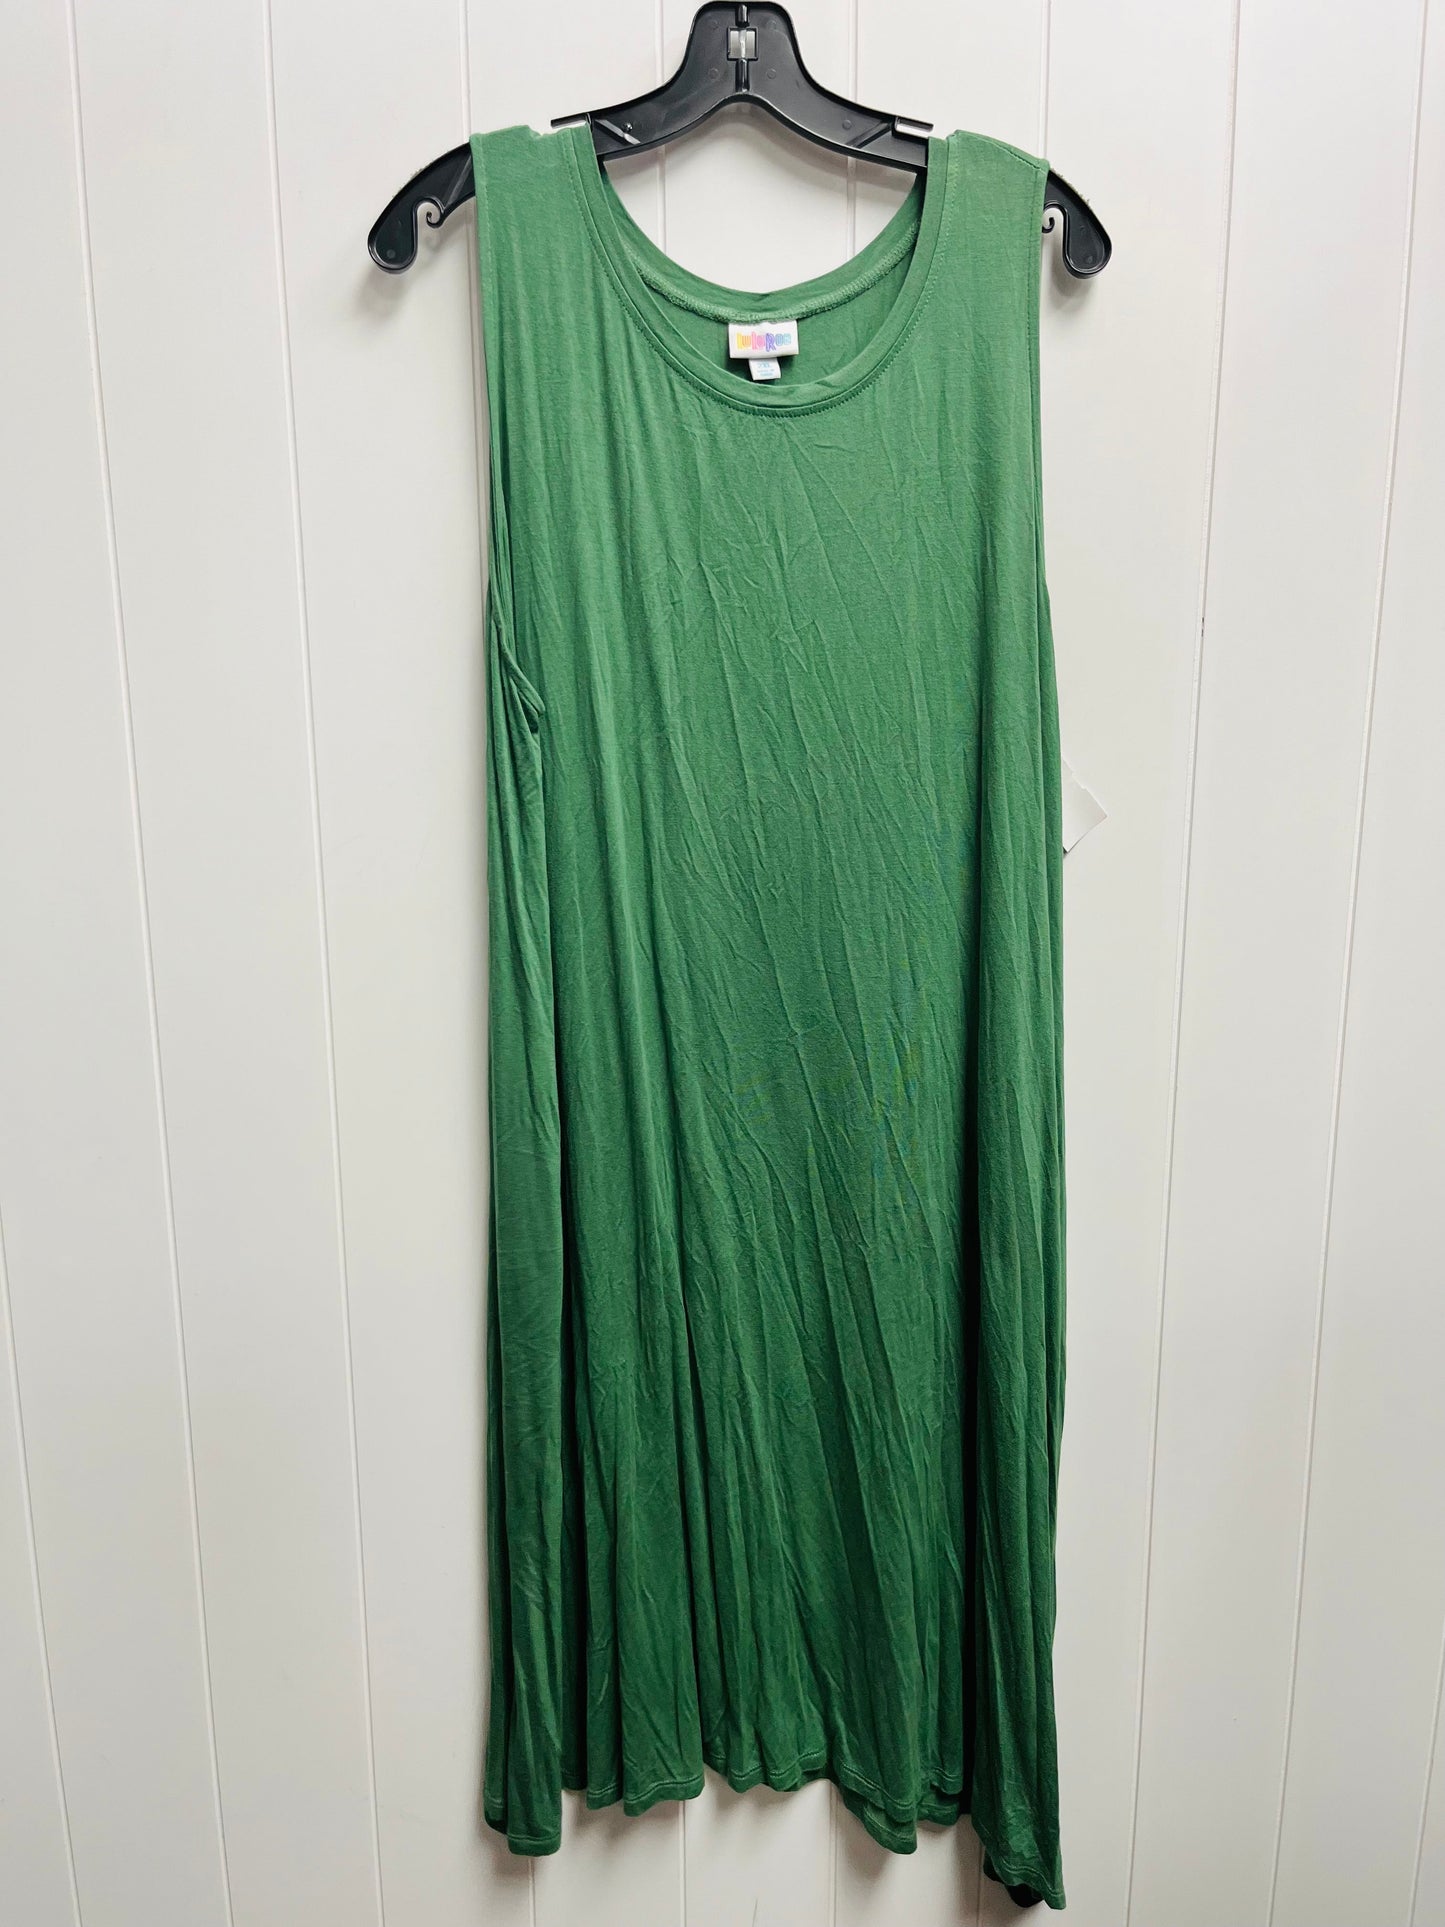 Green Dress Casual Short Lularoe, Size 2x